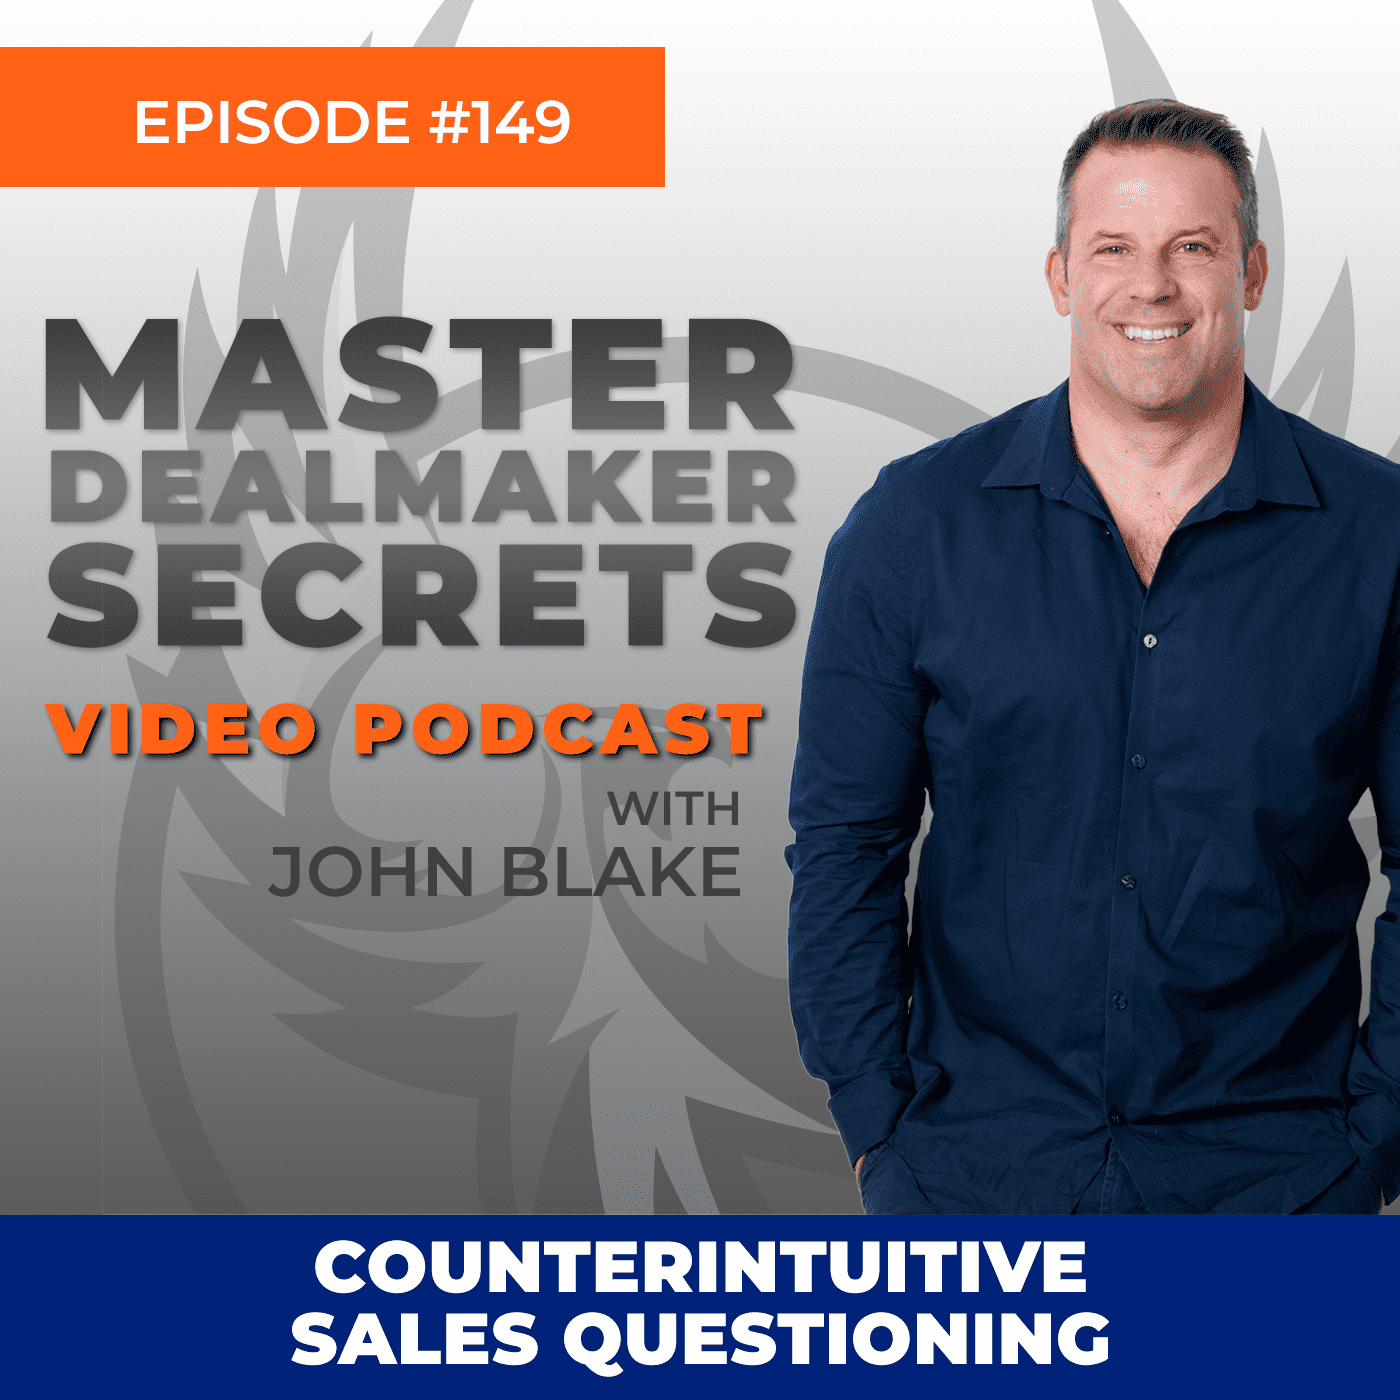 John Blake Counterintuitive Sales Questioning